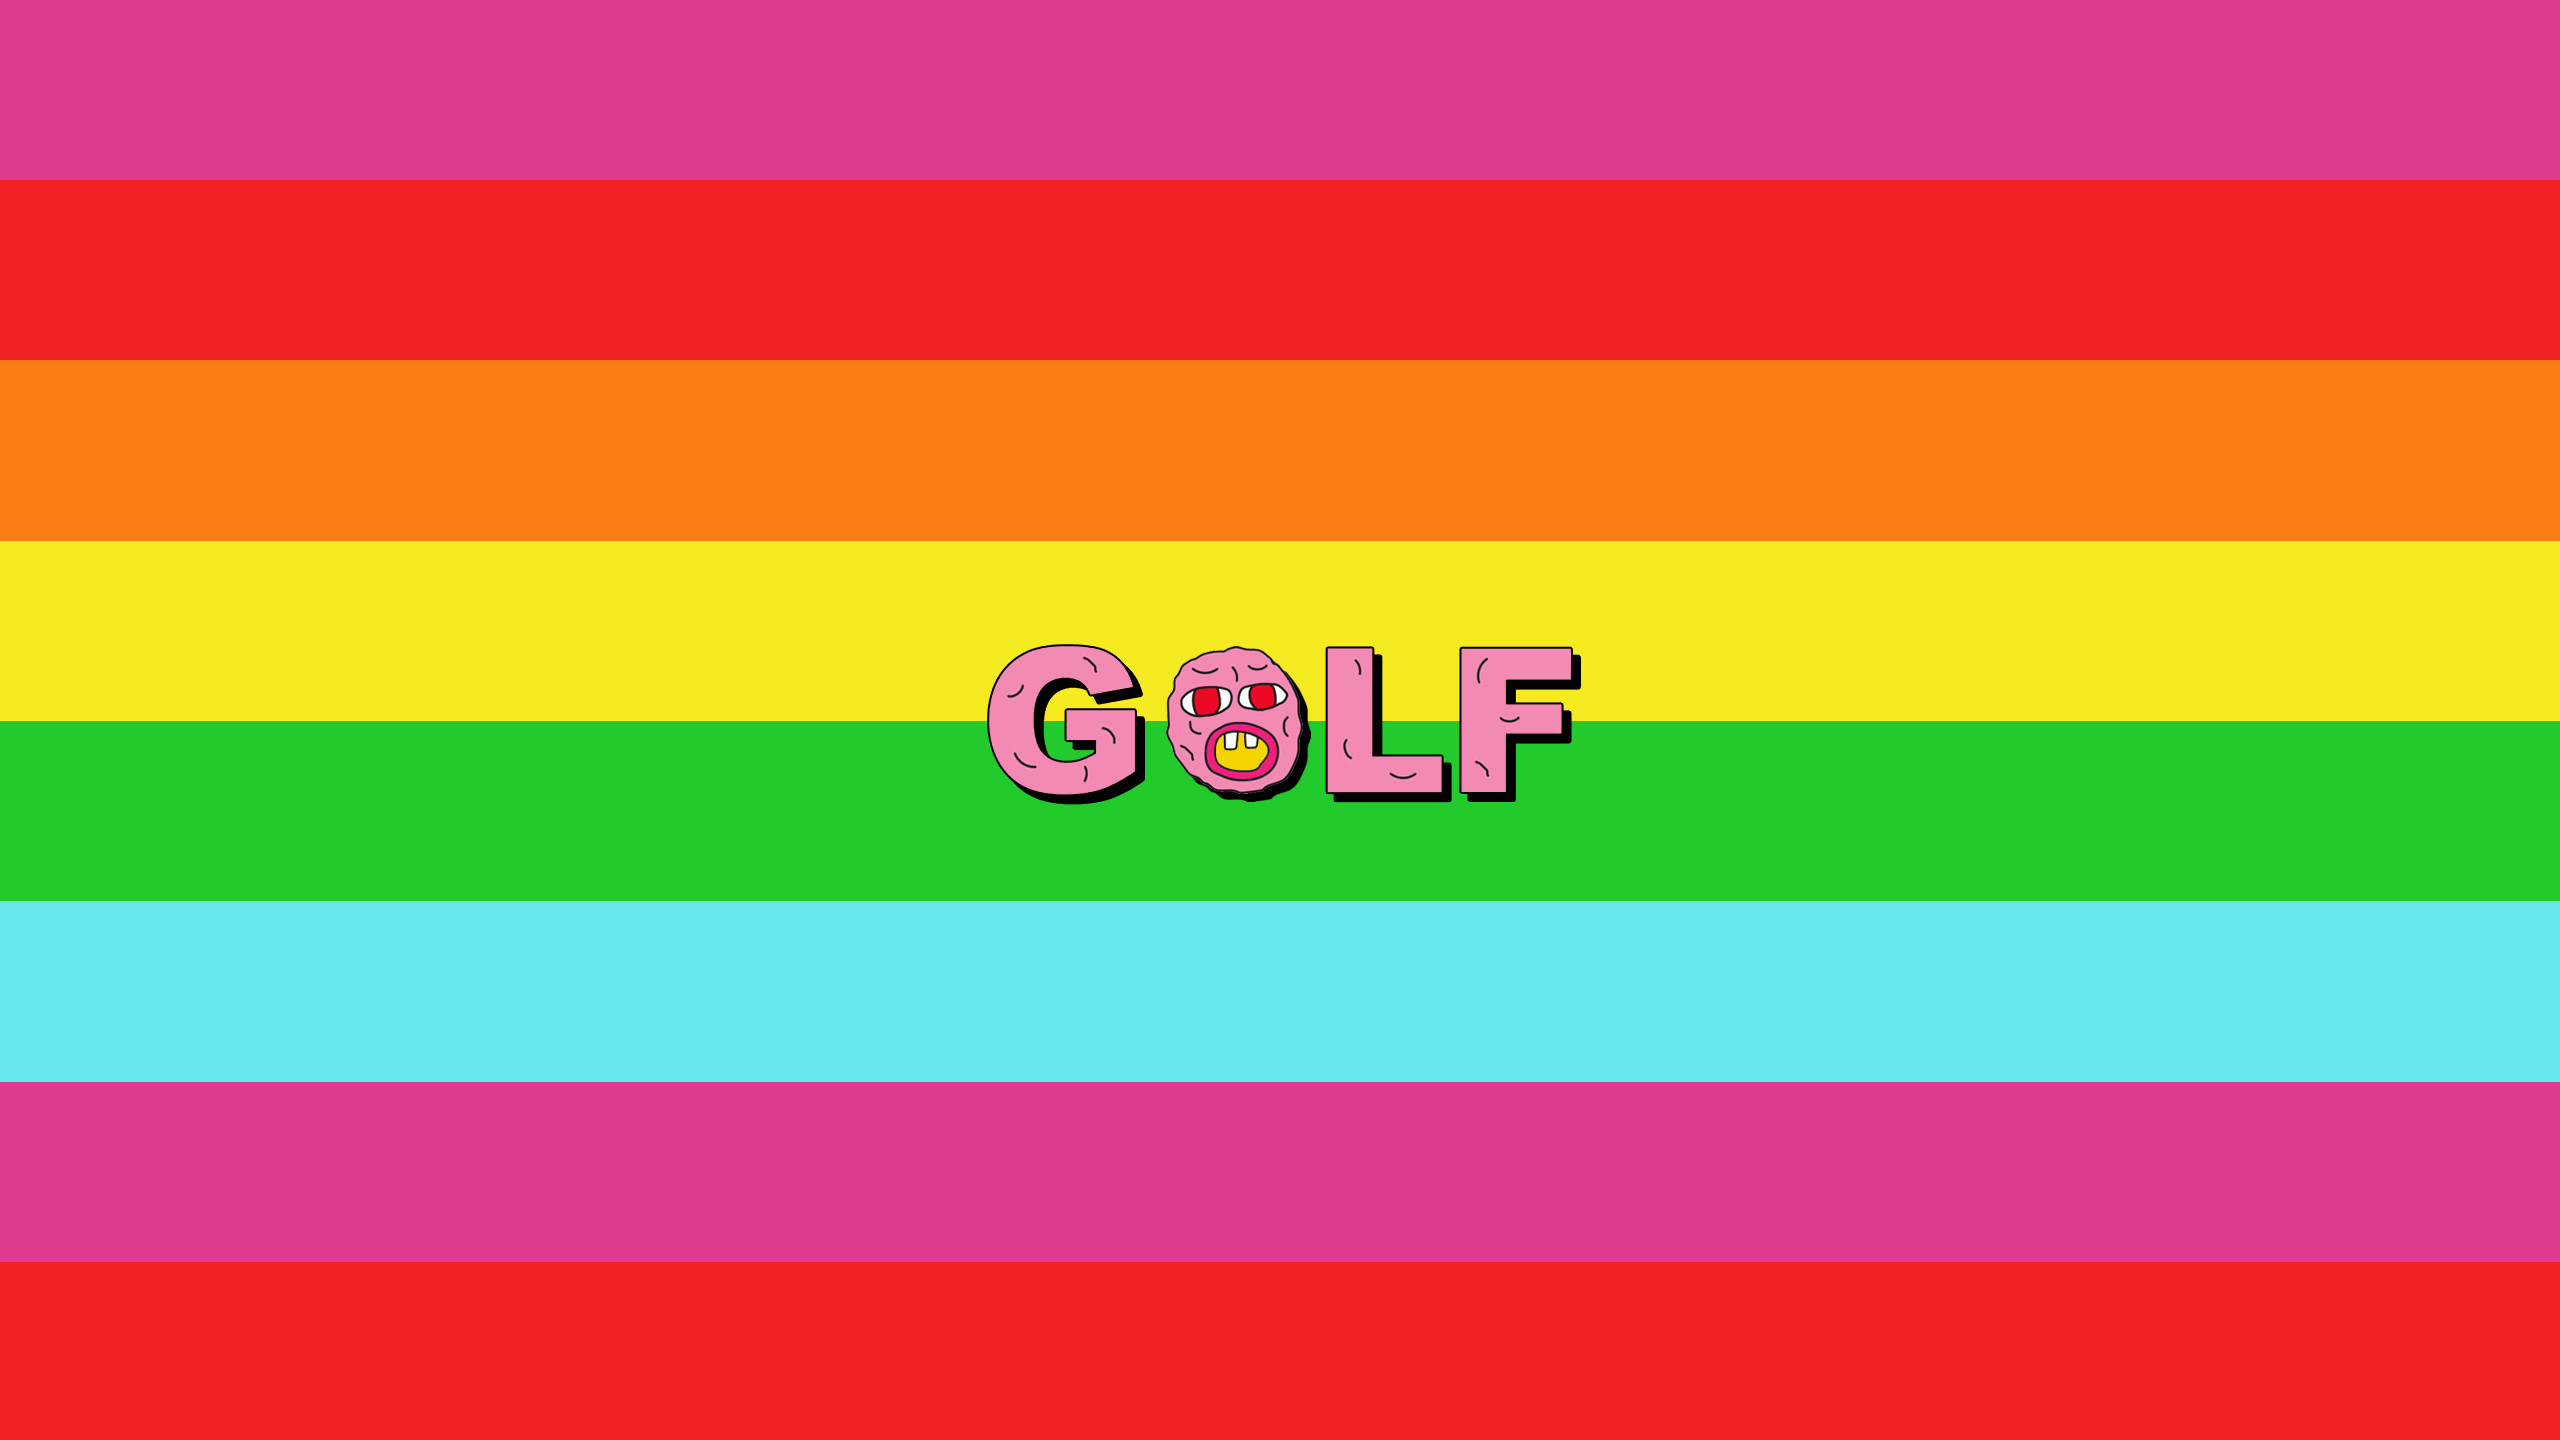 2560x1440 Golf Wang Wallpaper Hd Made some chery bomb themed desktop wallpapers .